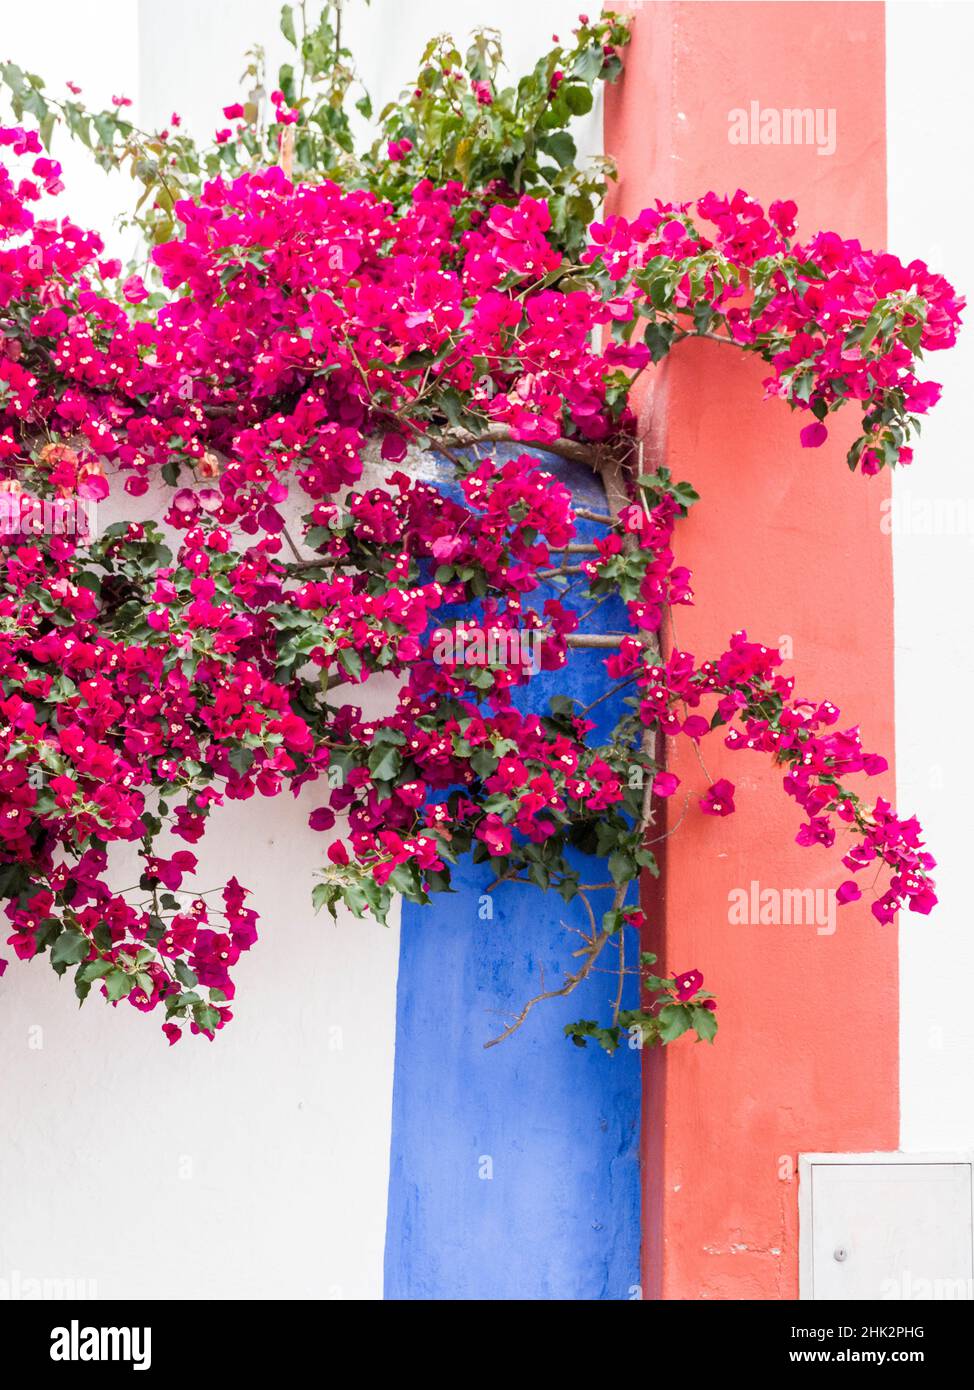 Portugal, Obidos. Dark pink bougainvillea vine against a blue, orange and white striped wall. Stock Photo